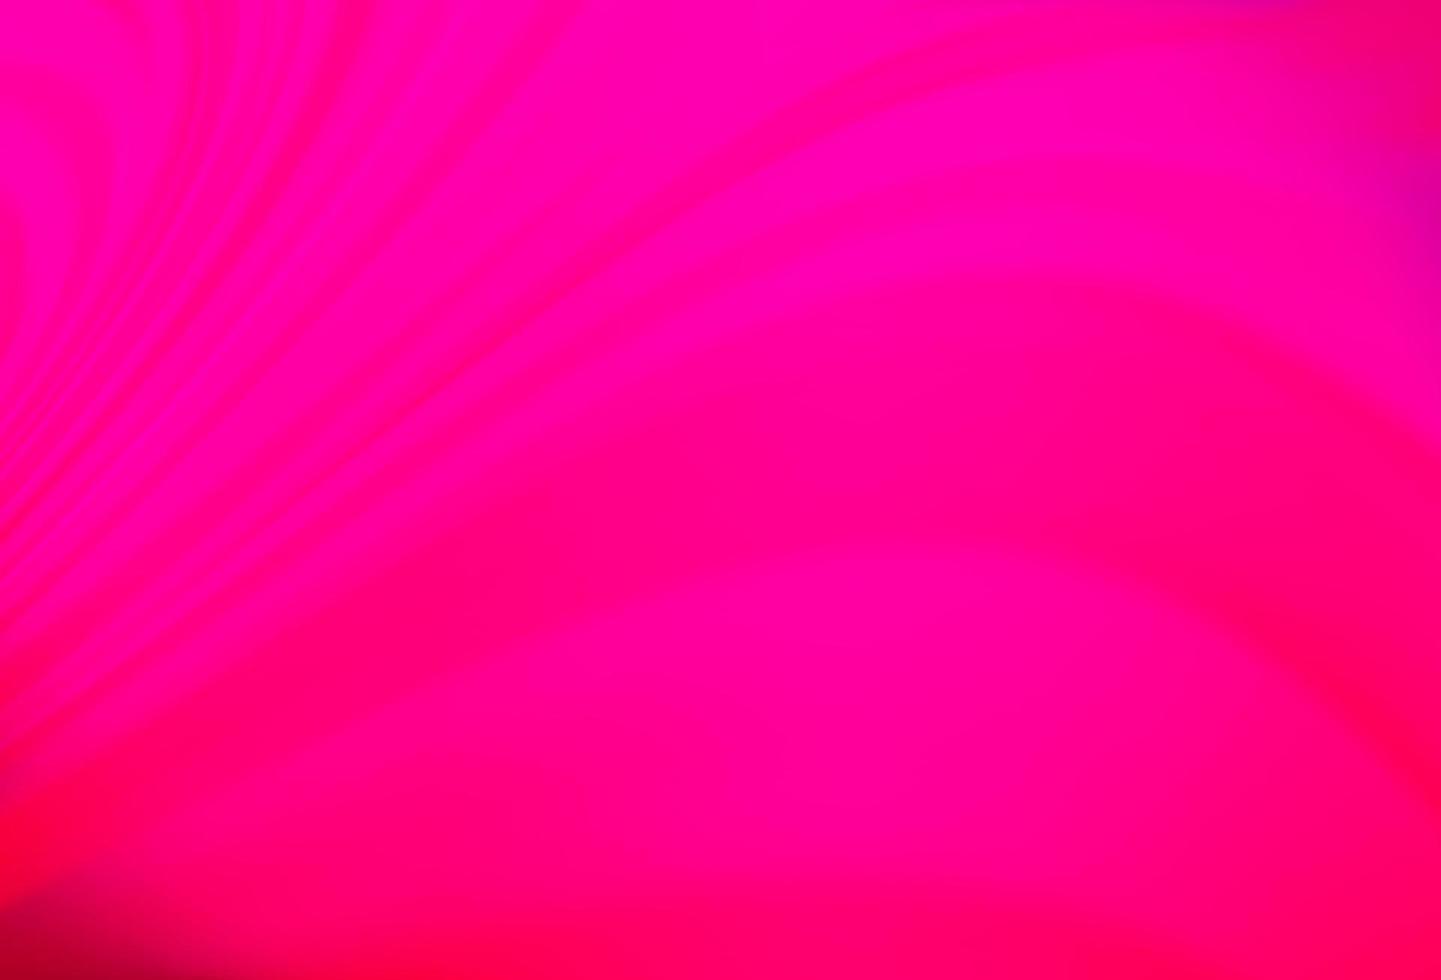 Fondo de vector violeta, rosa claro con líneas dobladas.